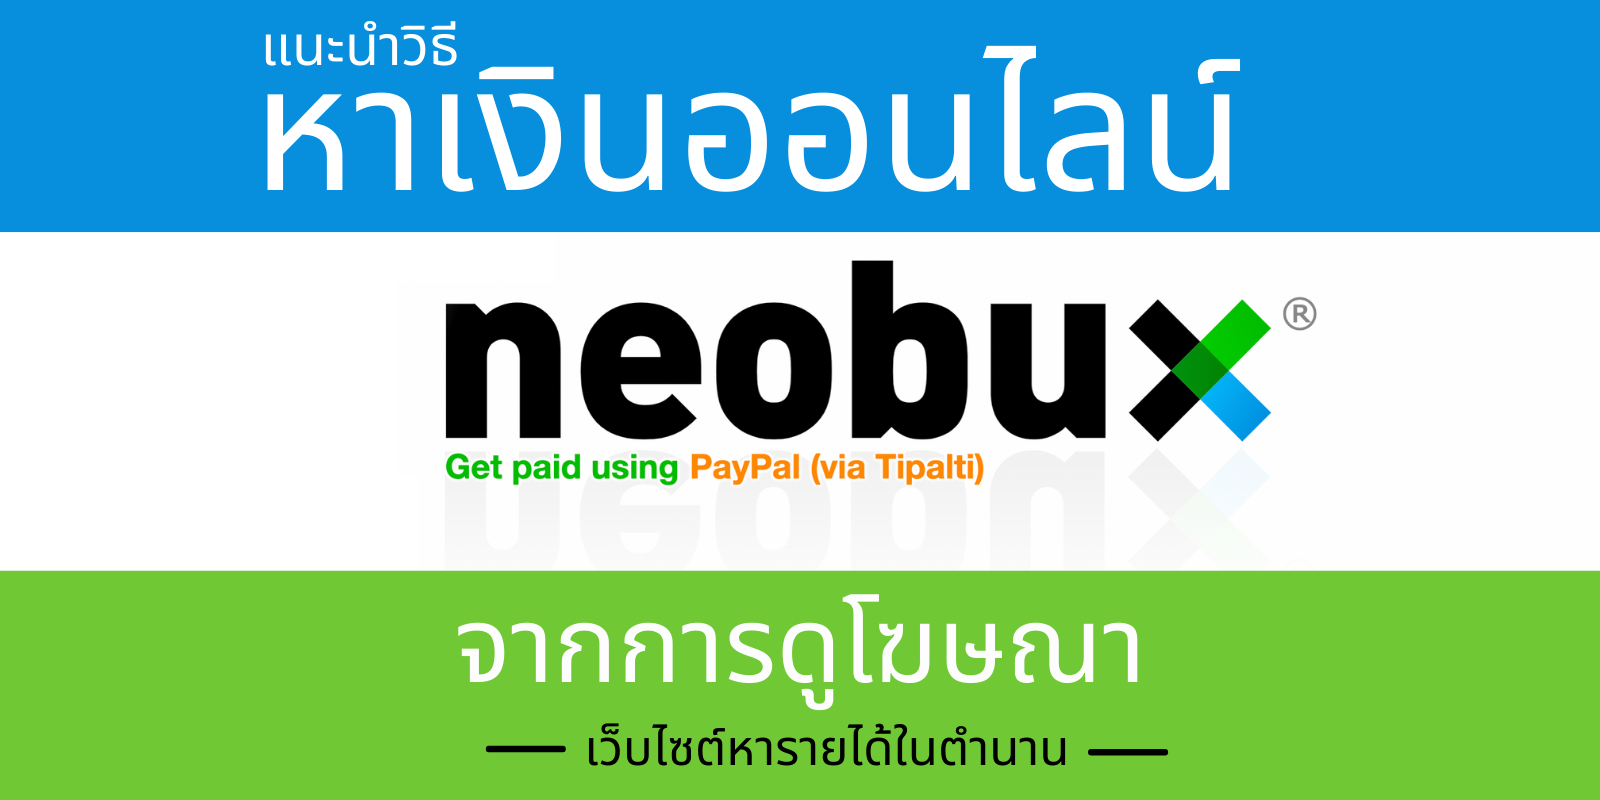 Neobux หาเงินออนไลน์ จากการคลิกโฆษณา ดูวิดีโอ ทำแบบสอบถาม แบบไม่ต้องลงทุน  ได้เงินจริง มือถือก็ทำได้